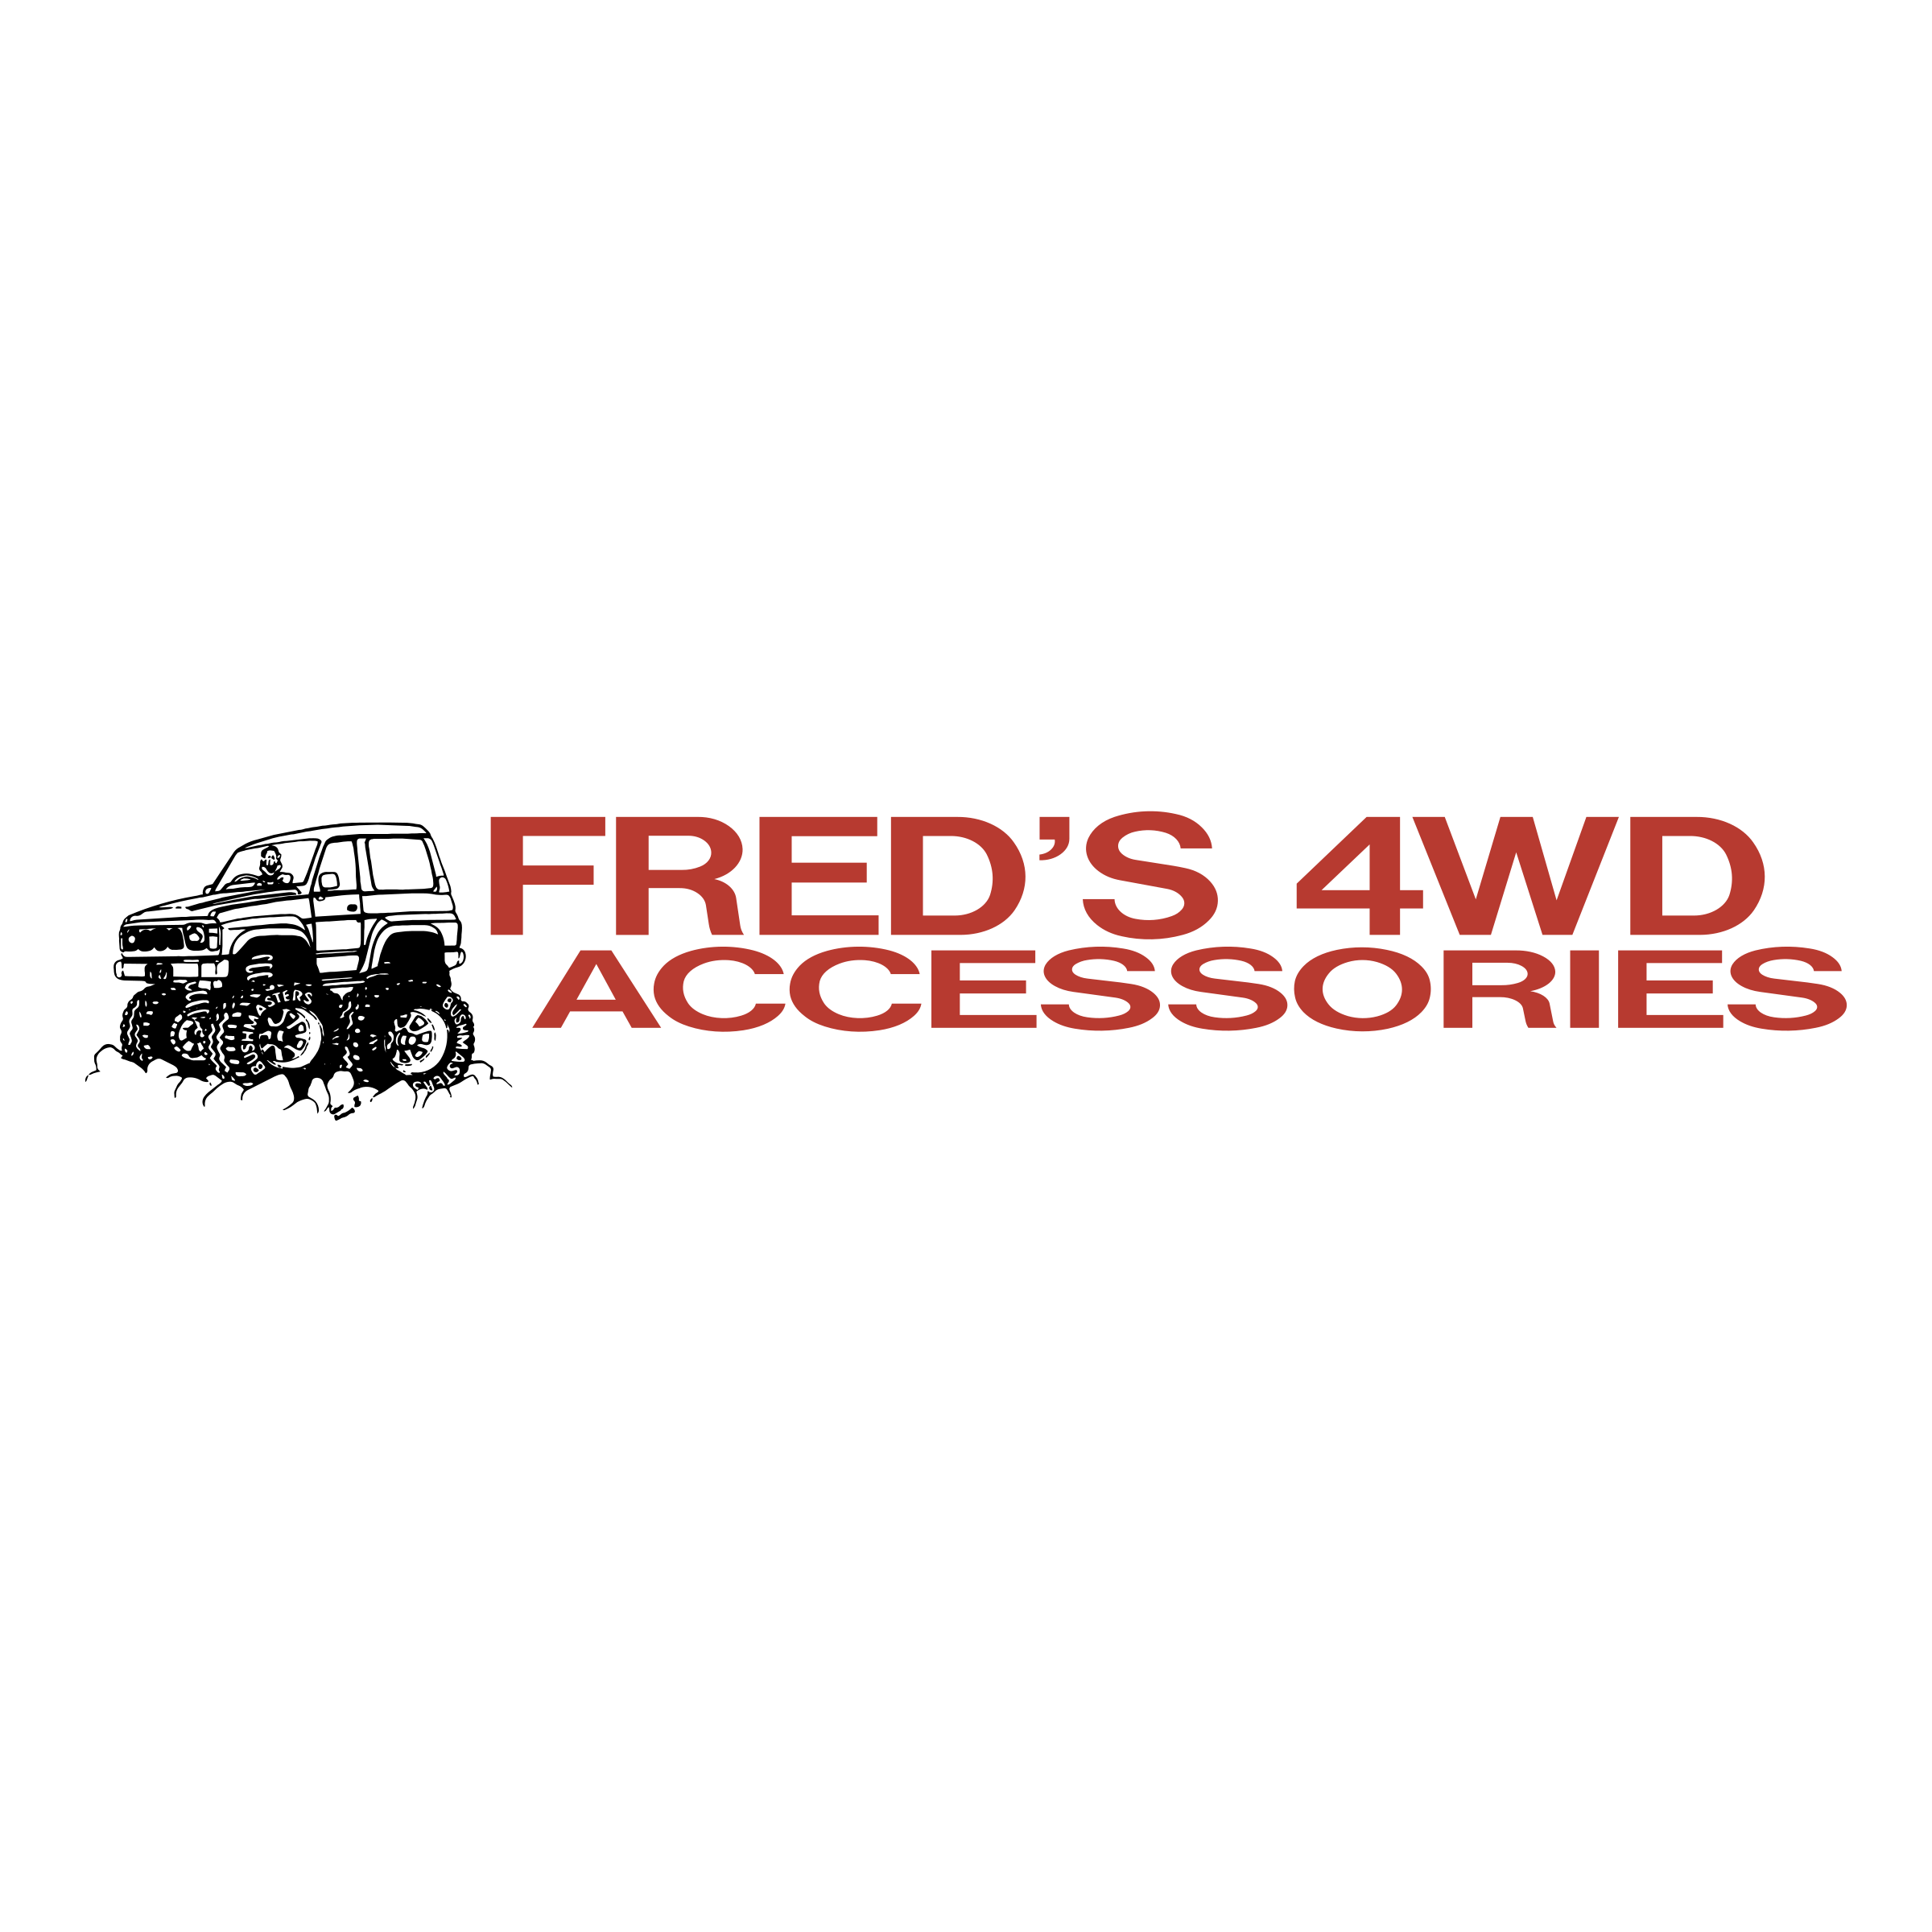 OFF! Logo PNG Transparent & SVG Vector - Freebie Supply